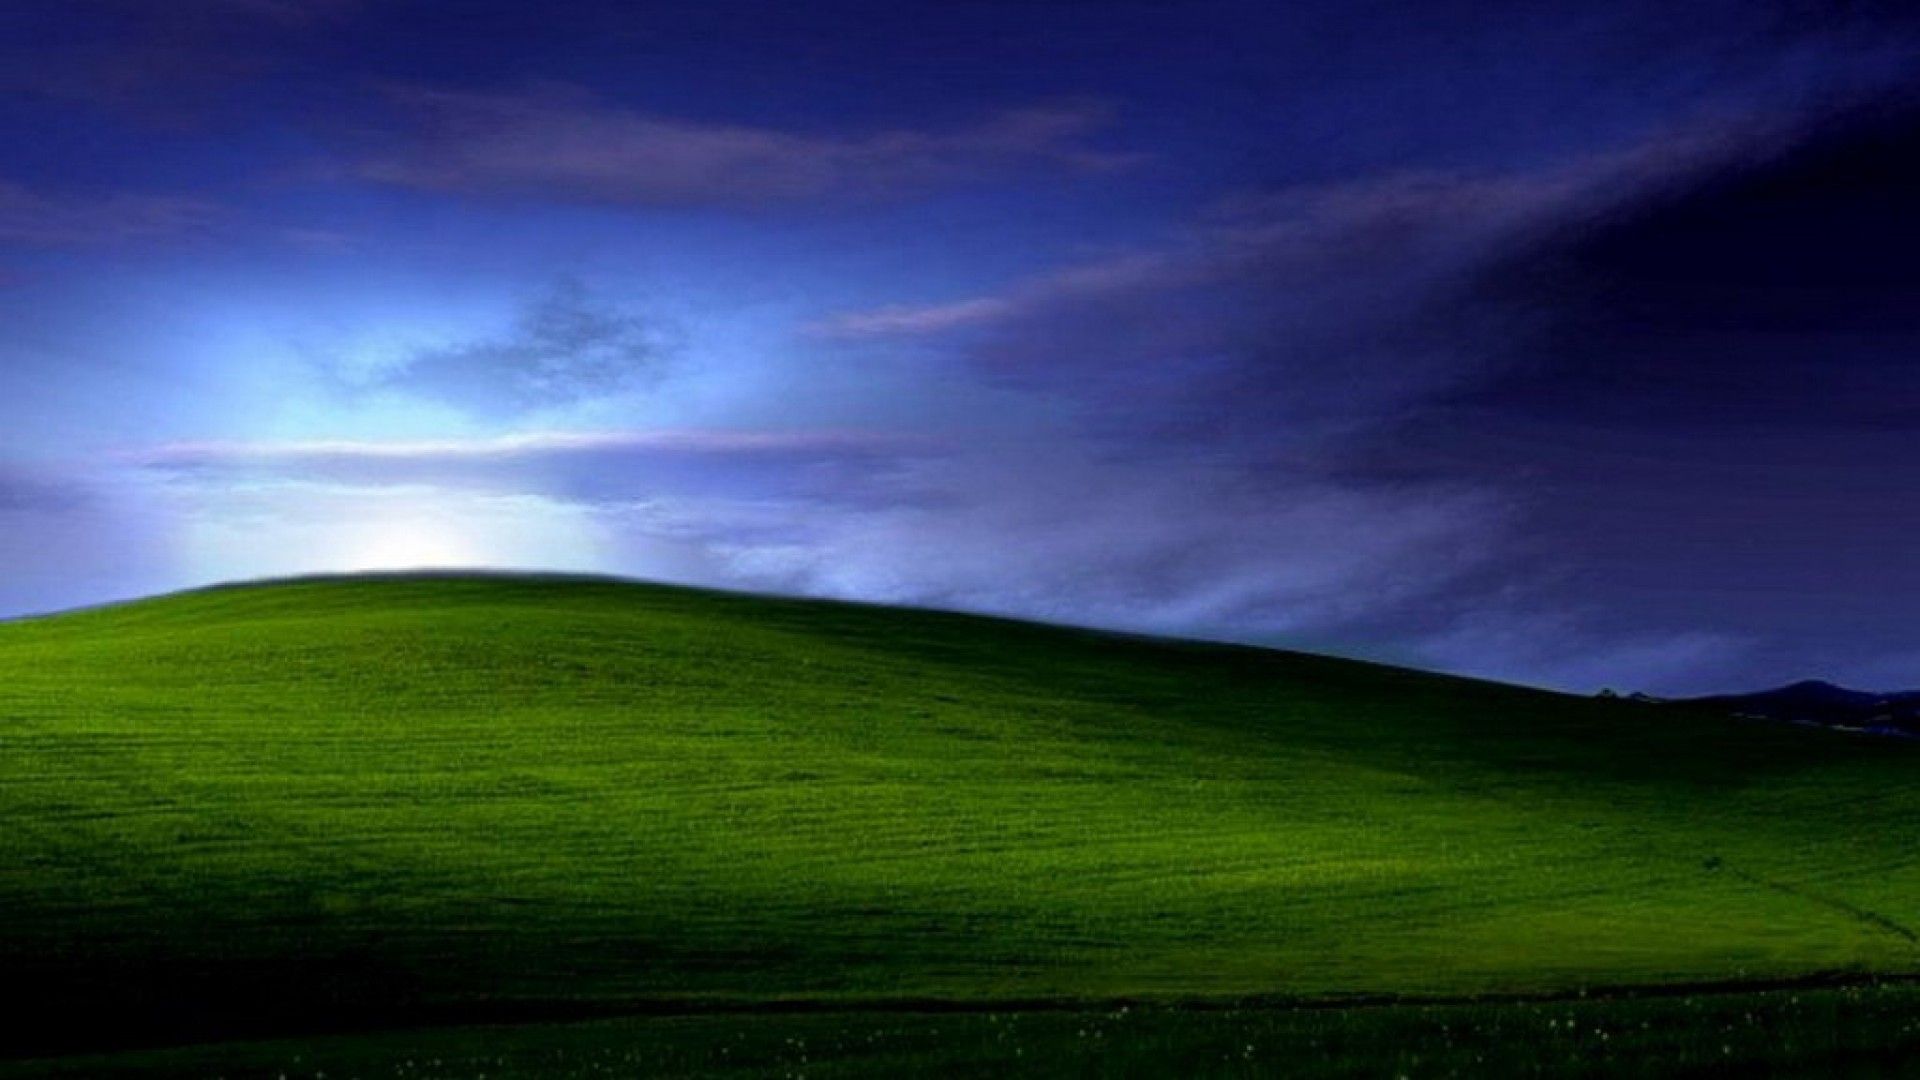 Windows XP 10 Wallpaper 4K by focusentertainment69 on DeviantArt